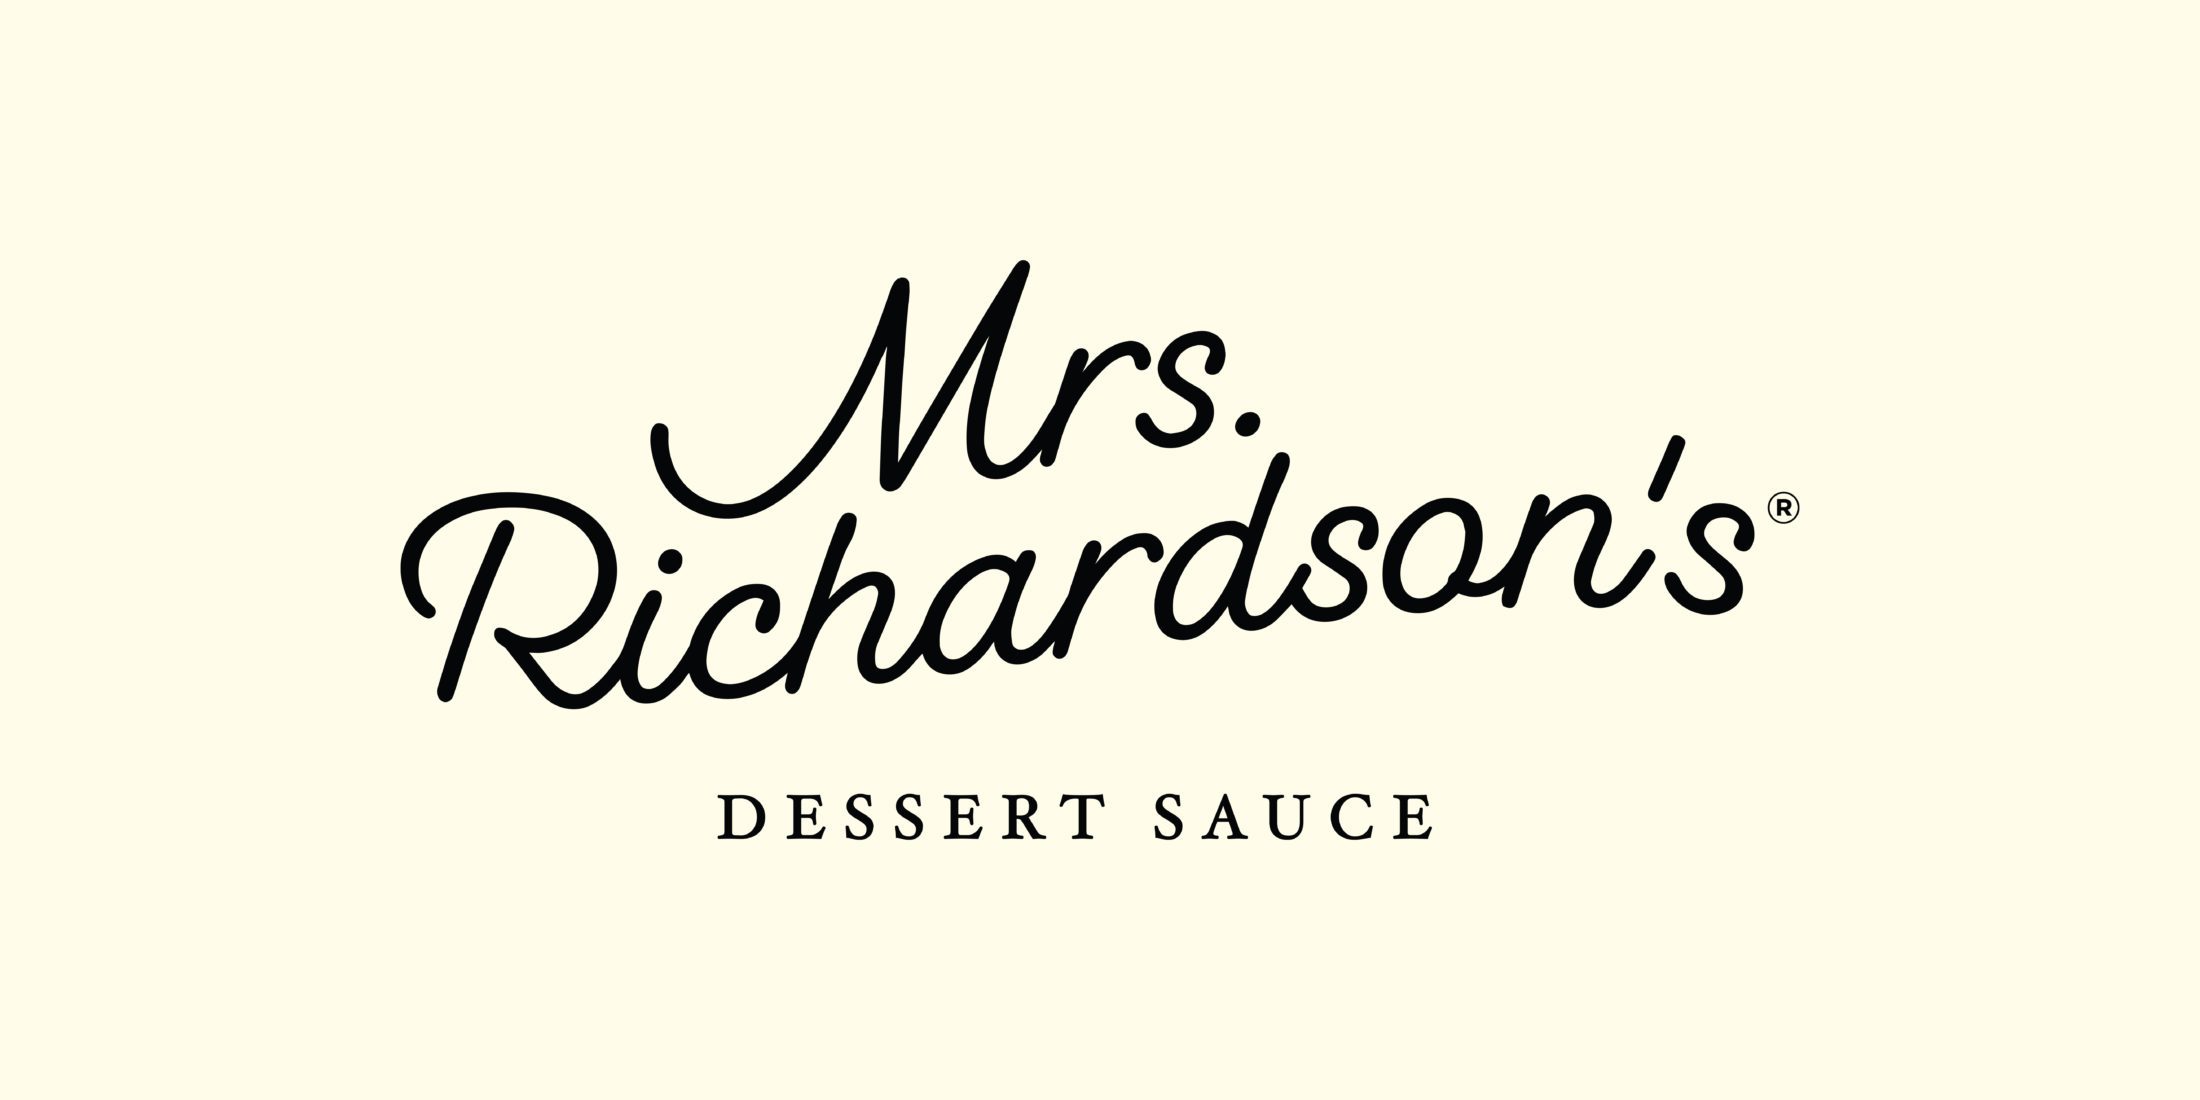 New typographic logo redesign for Mrs. Richardson's dessert sauces.